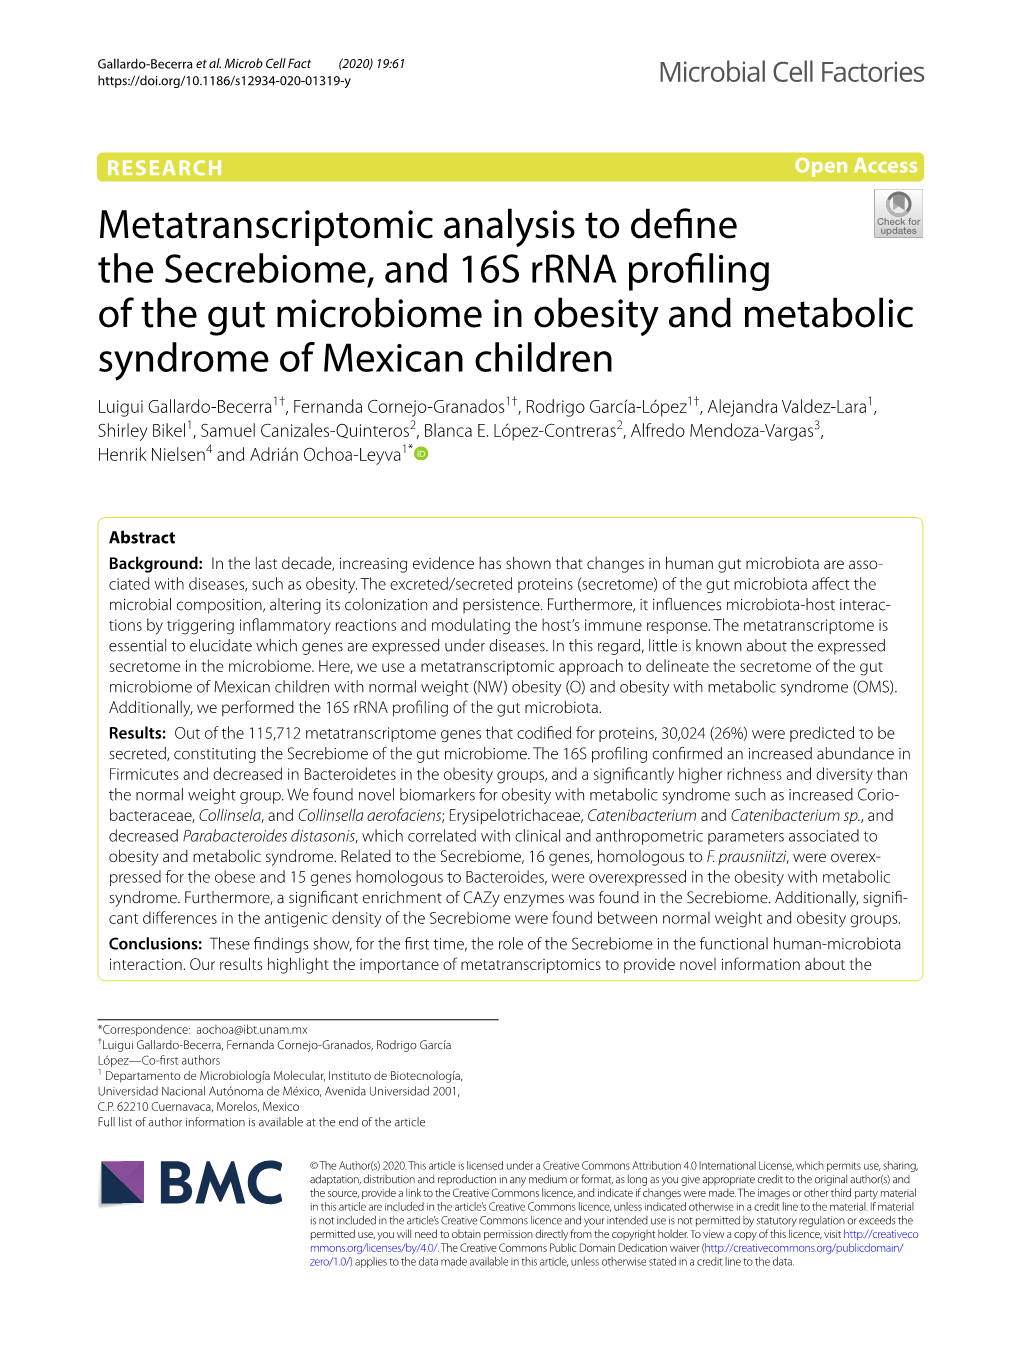 Metatranscriptomic Analysis to Define the Secrebiome, and 16S Rrna